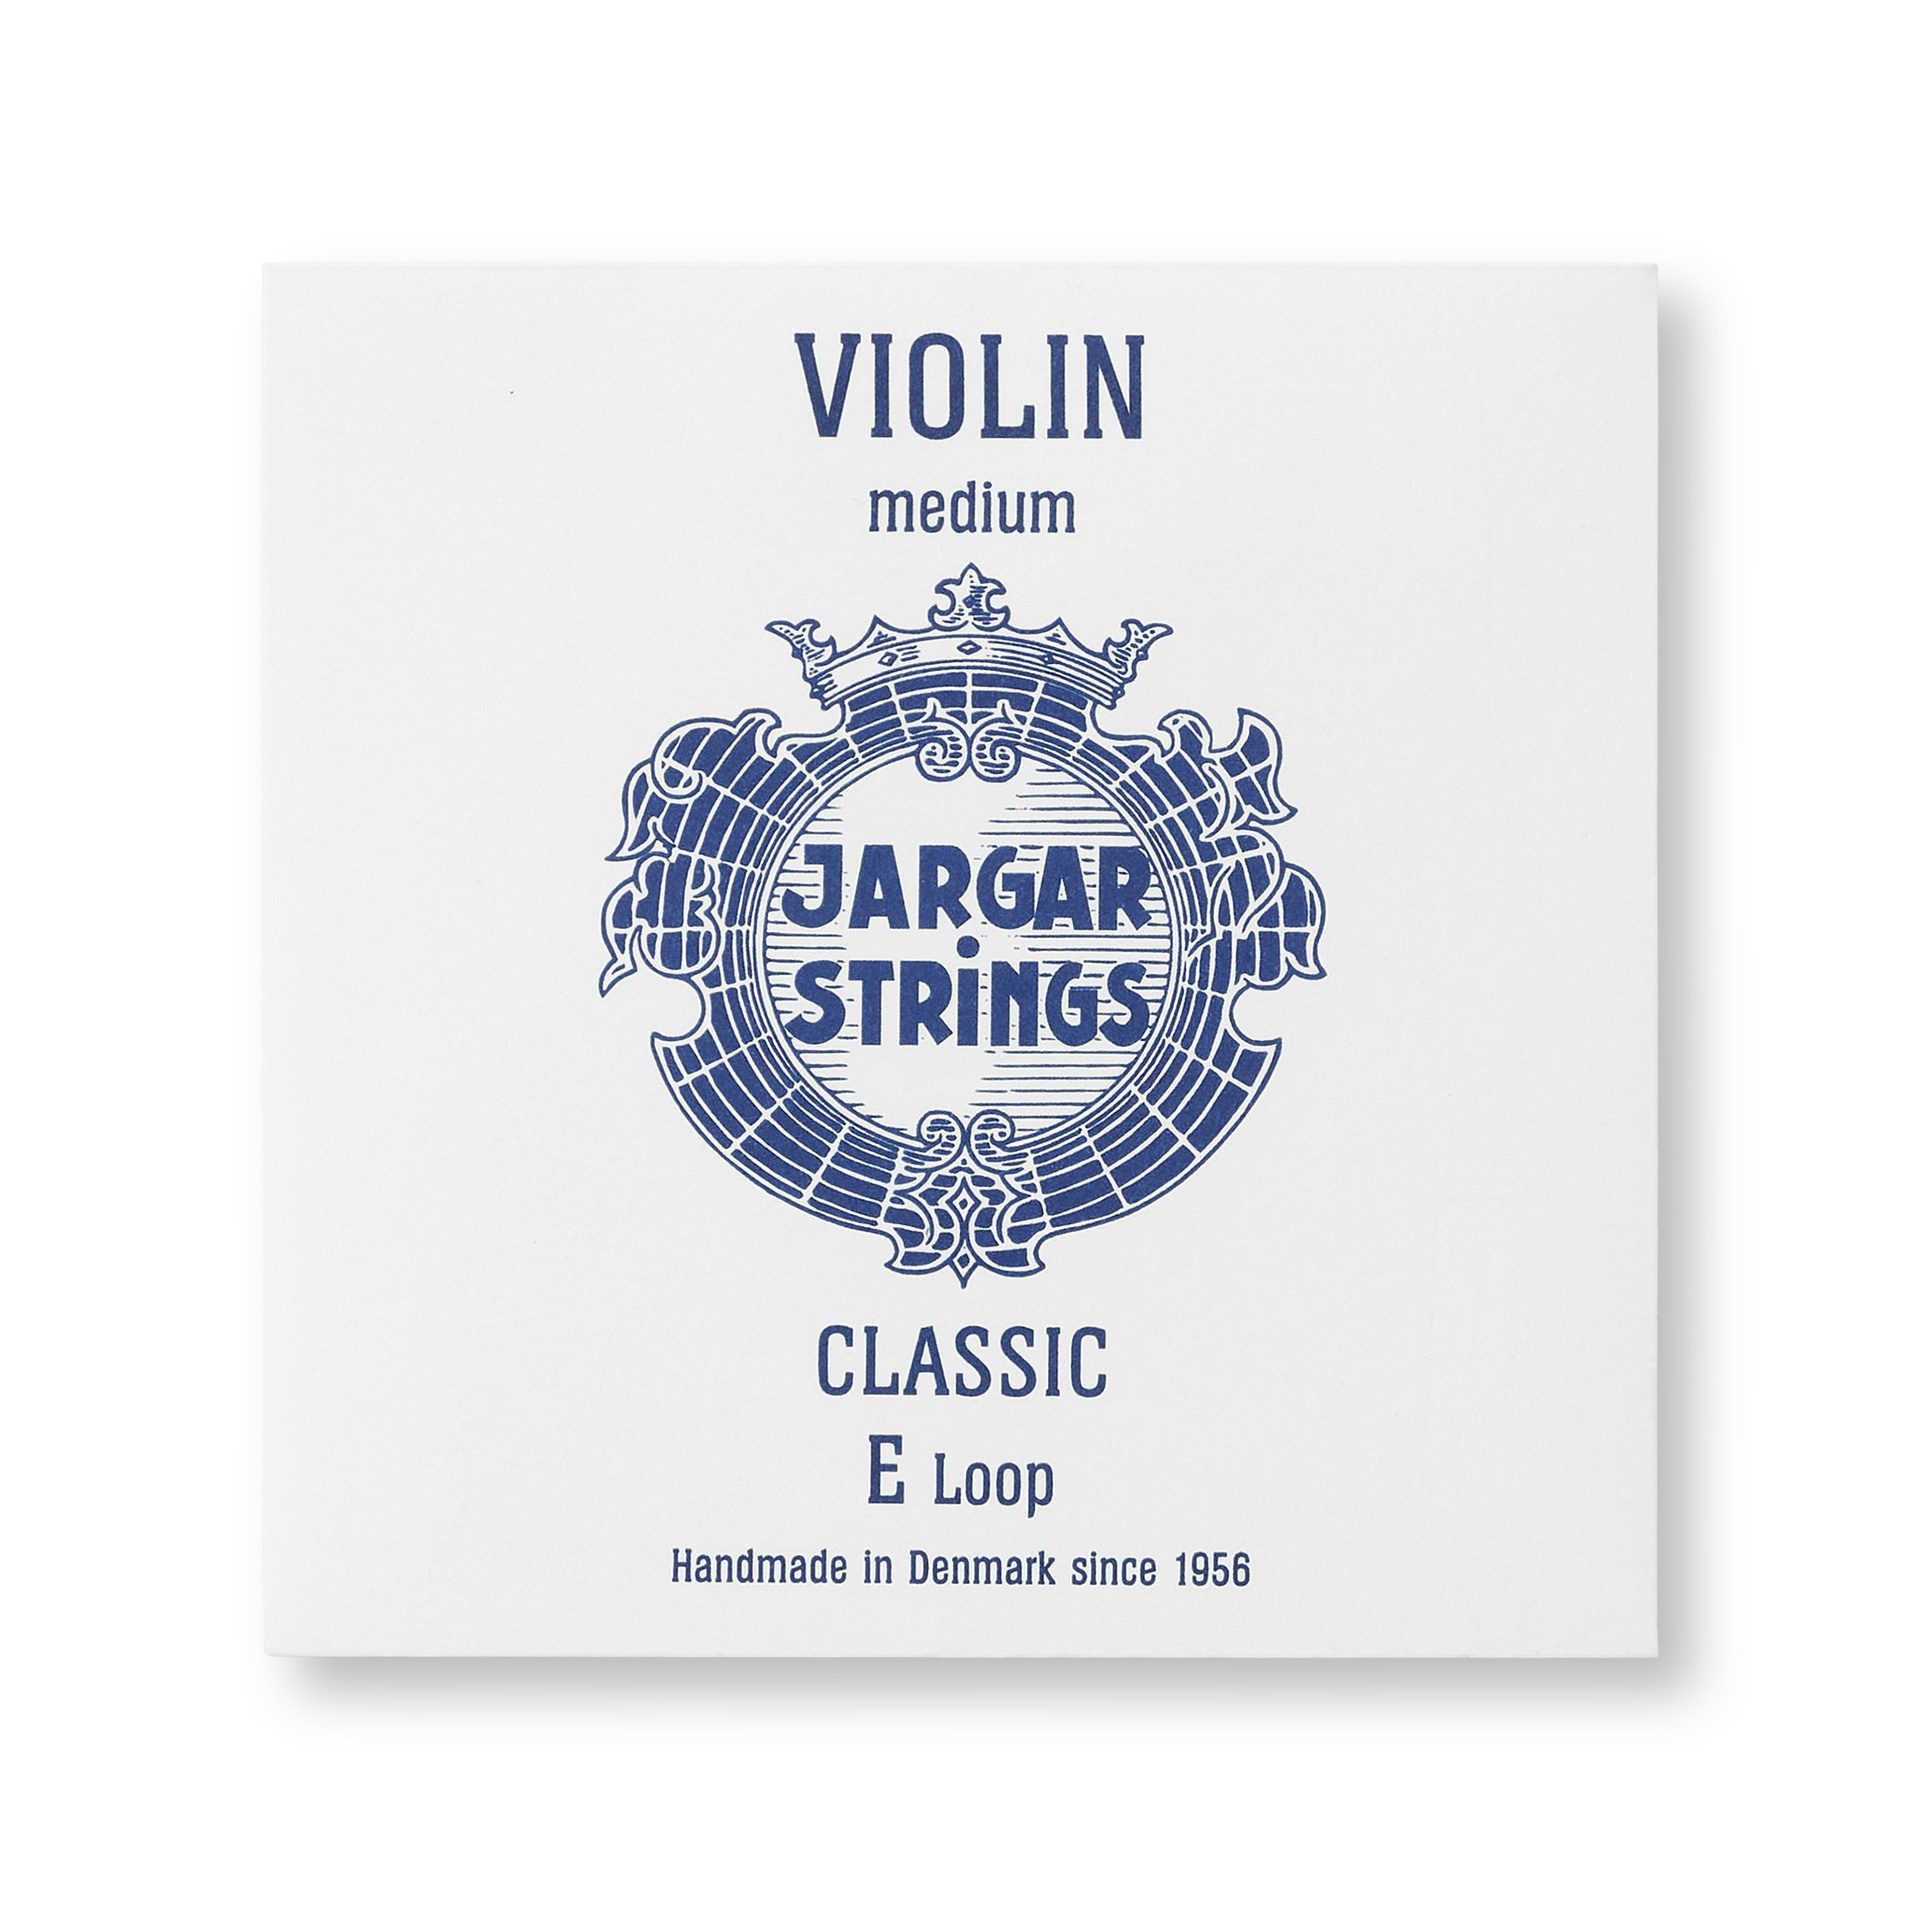 Classic Violin - Medium, Single E String, 4/4